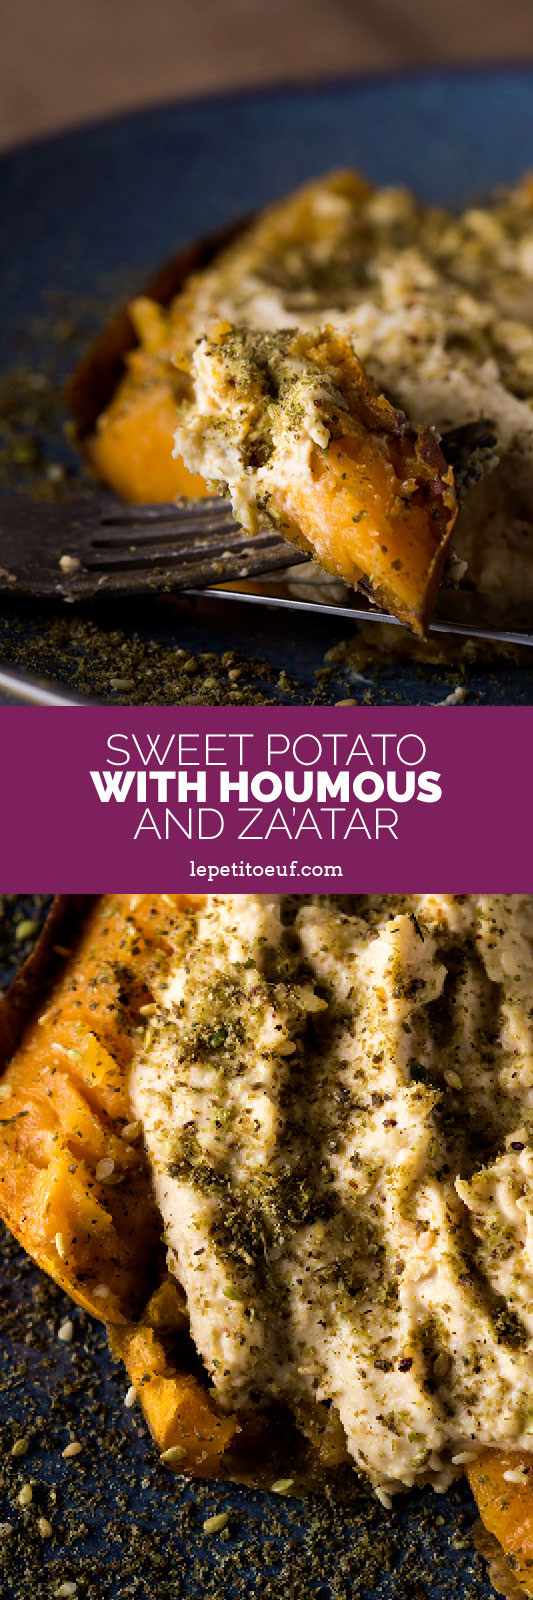 baked sweet potato with humous and za'atar